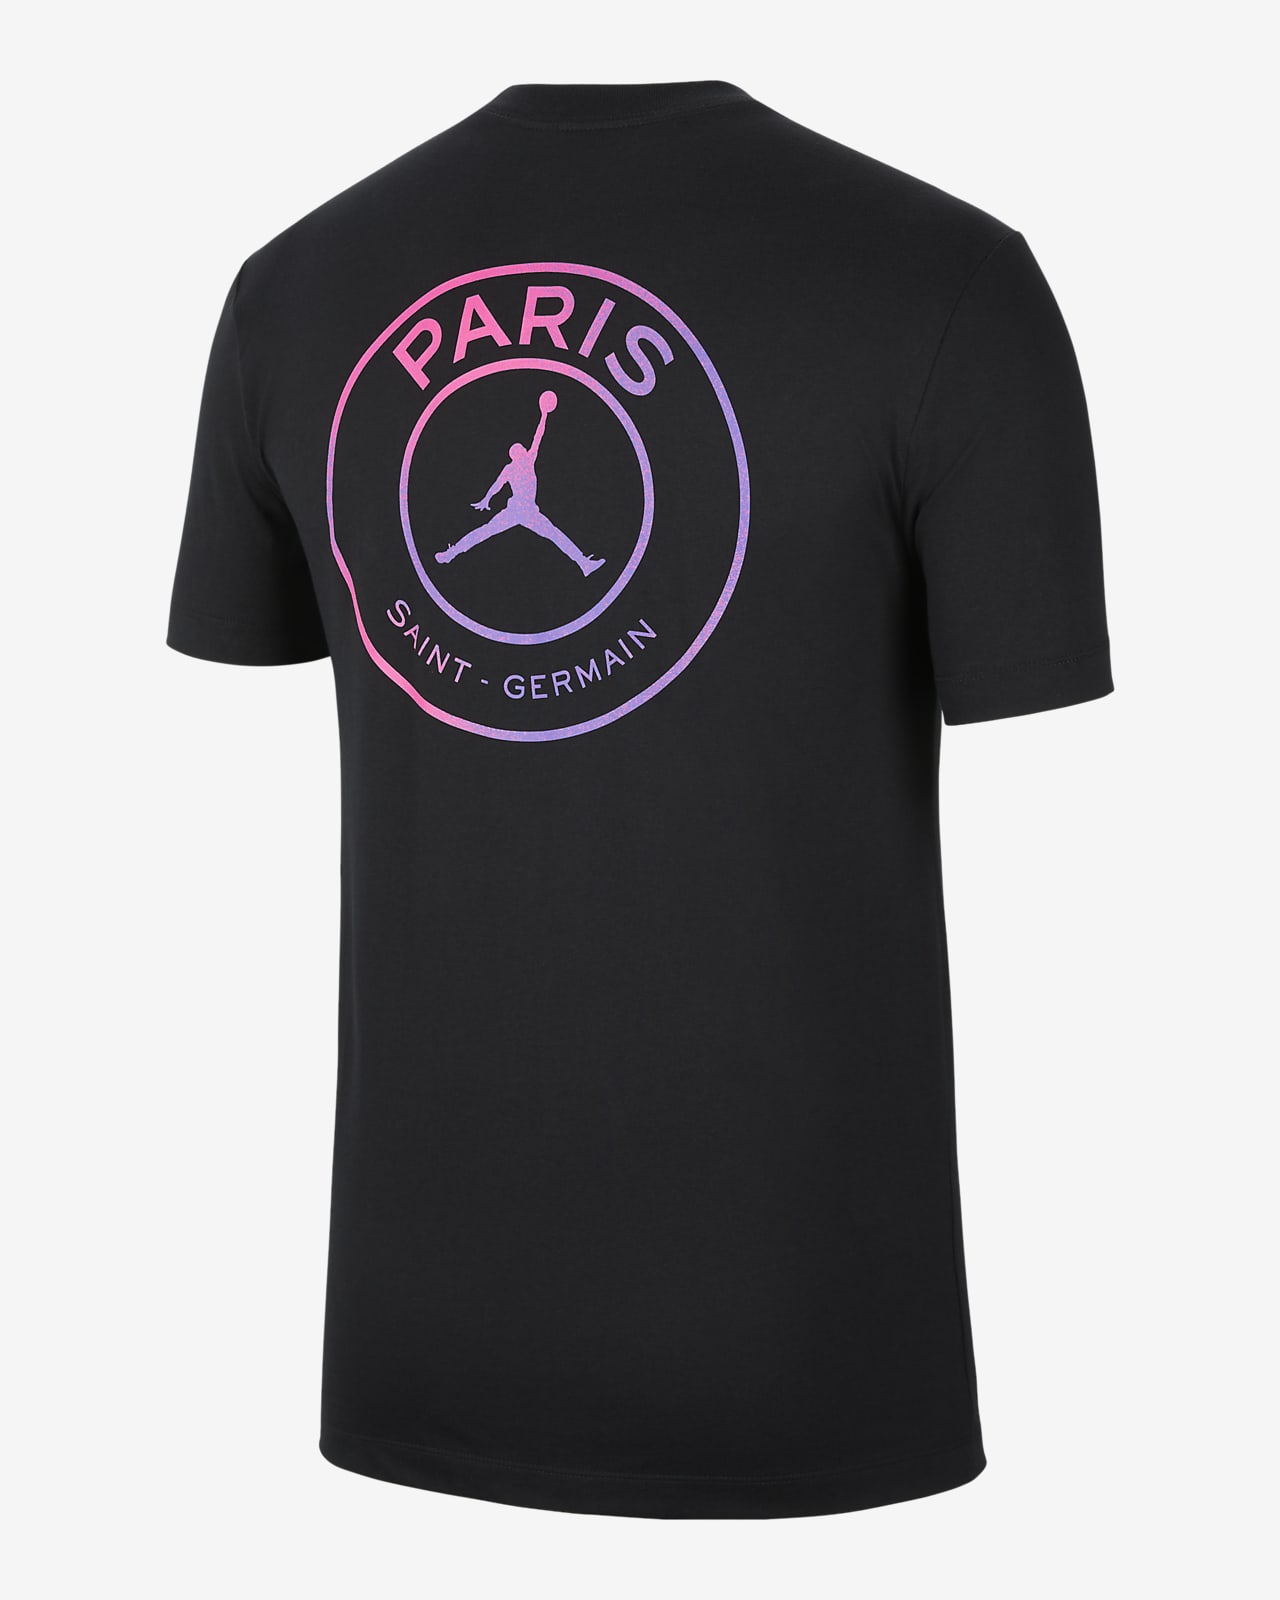 Paris Saint Germain Logo Herren T Shirt Nike Ch